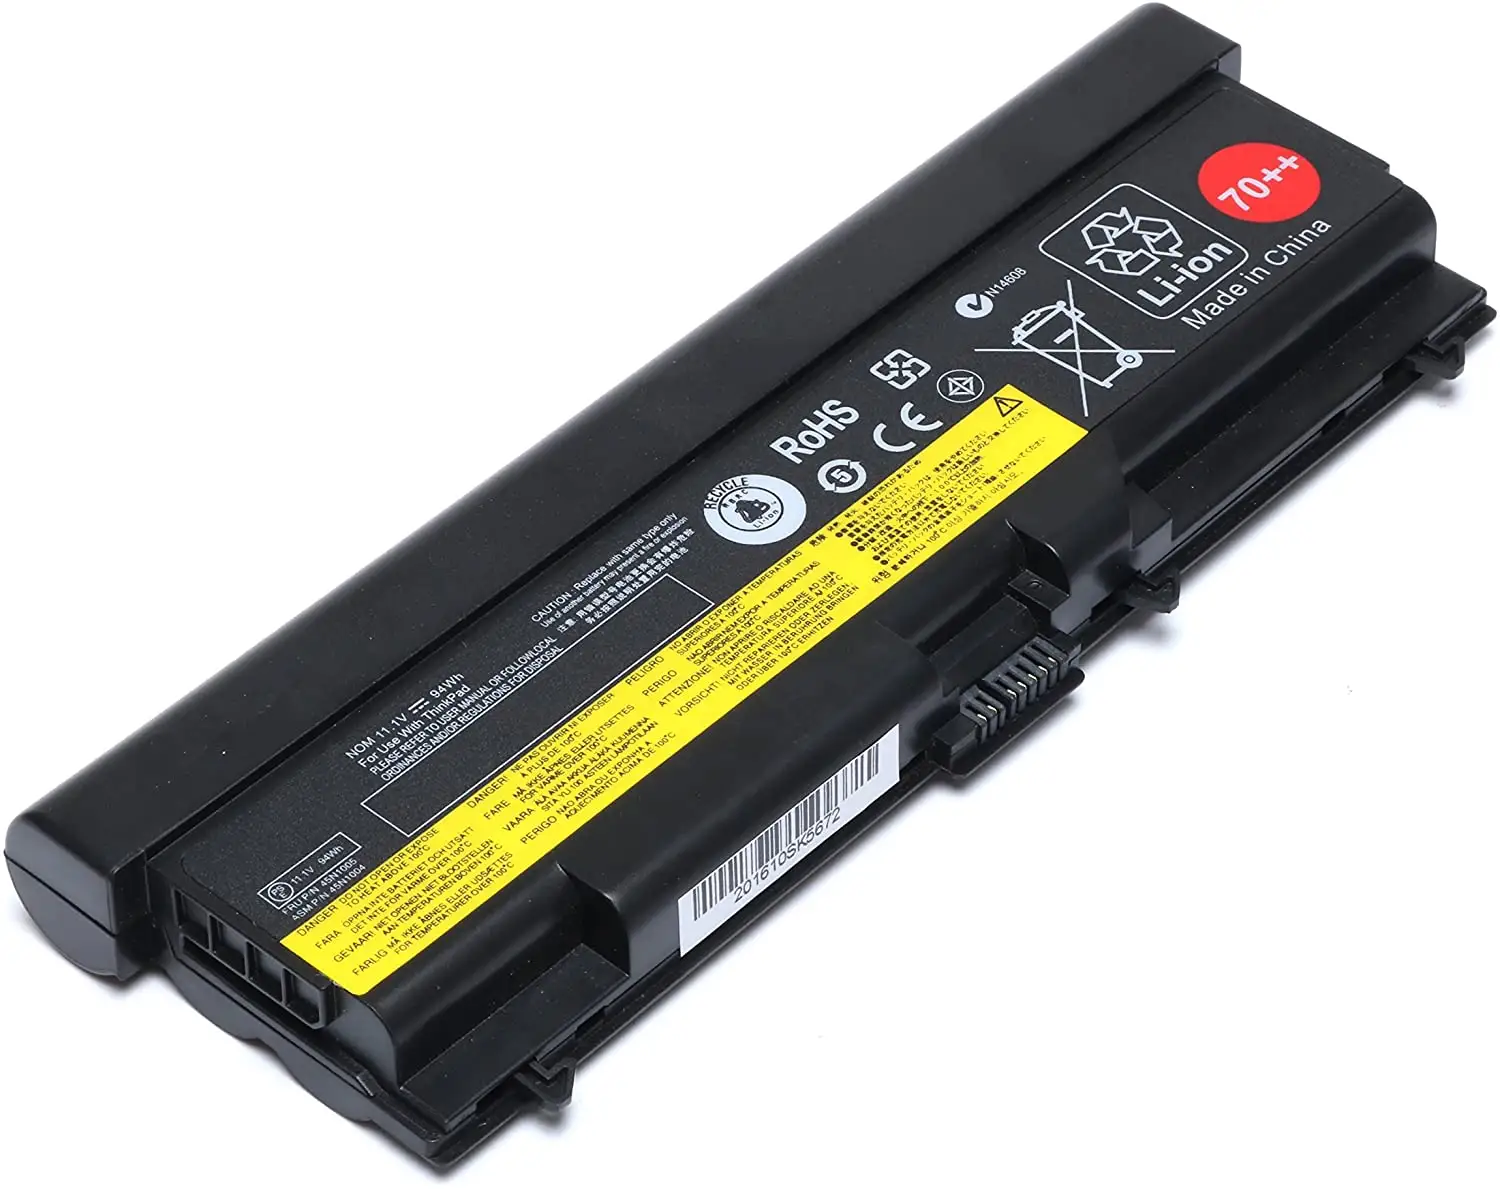 45N1004 45N1005 battery for lenovo IBM ThinkPad T430 T420 T410 T430h T530 T520 W530 W520 70++ 11.1V 94wh laptop batteries